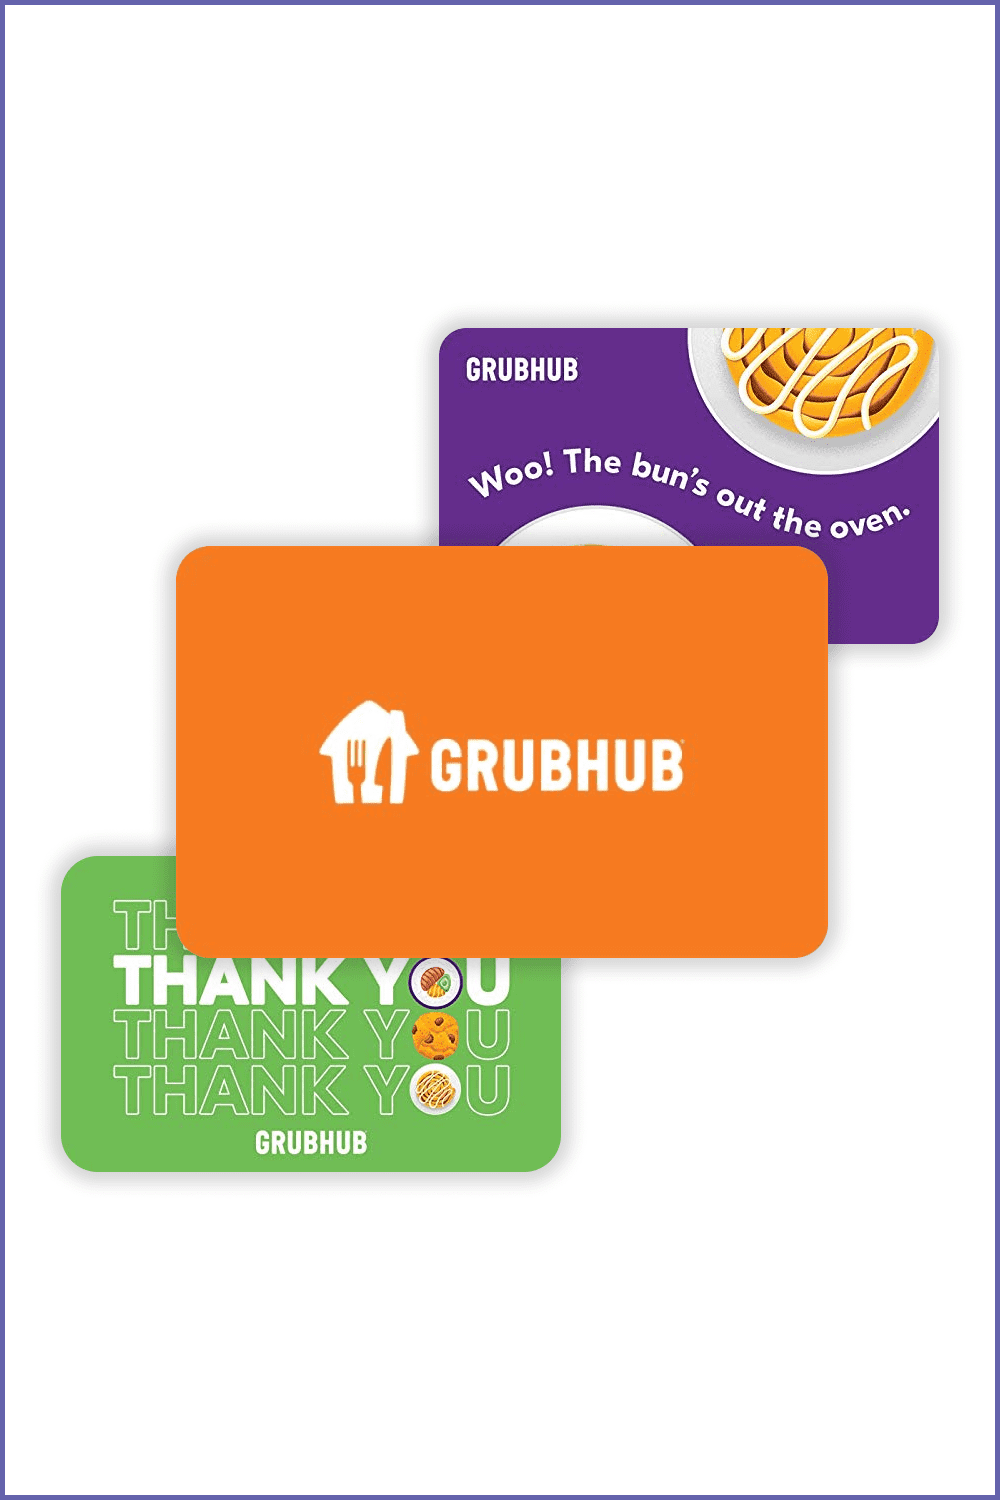 Photo of the Grubhub Gift Cards.